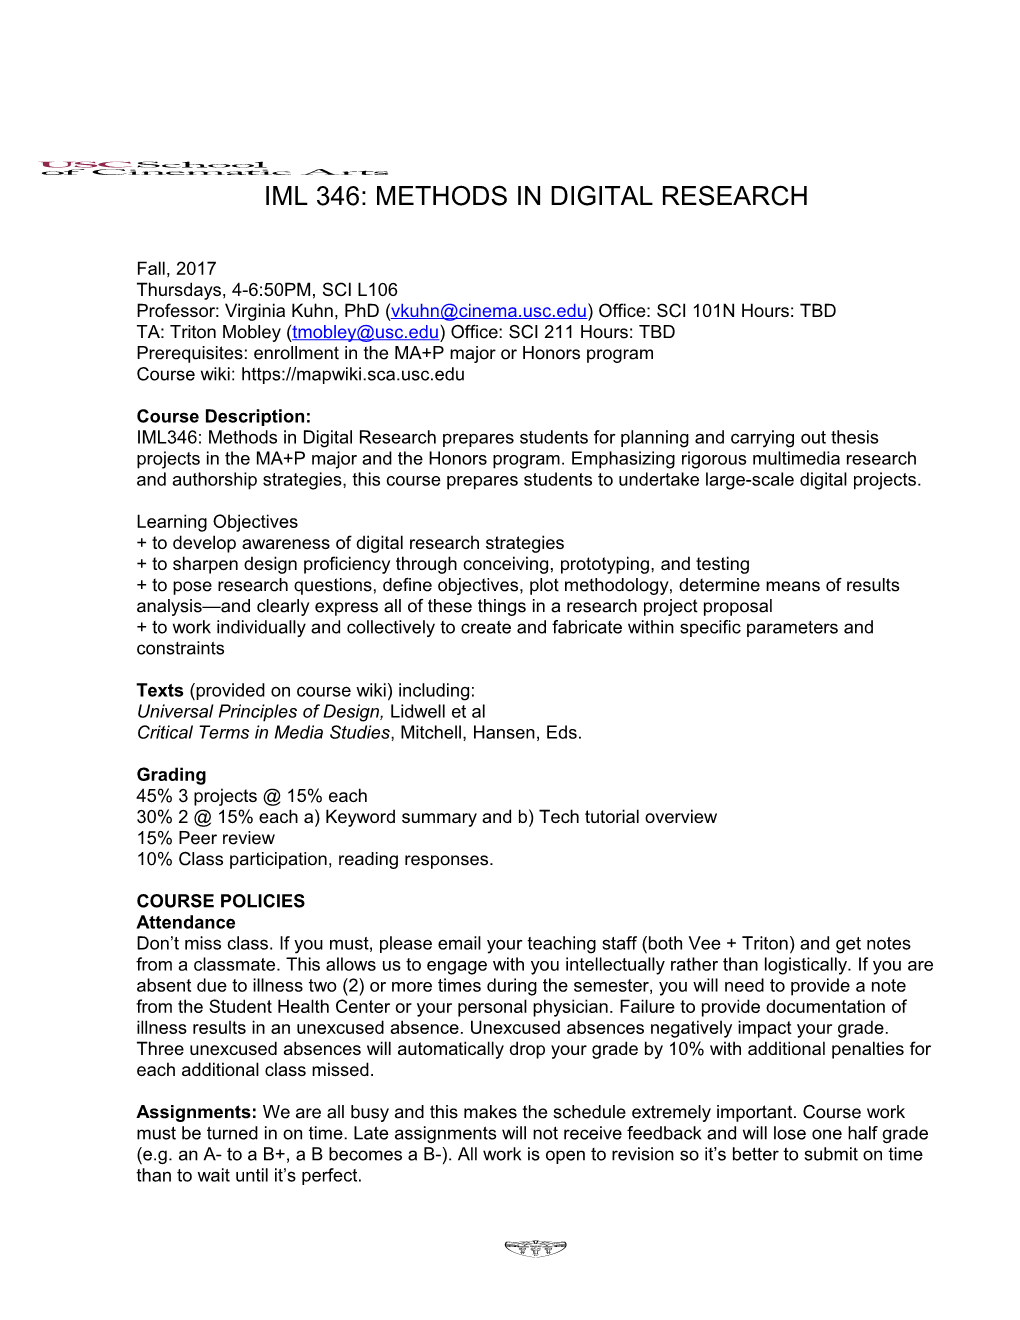 Iml 346: Methods in Digital Research